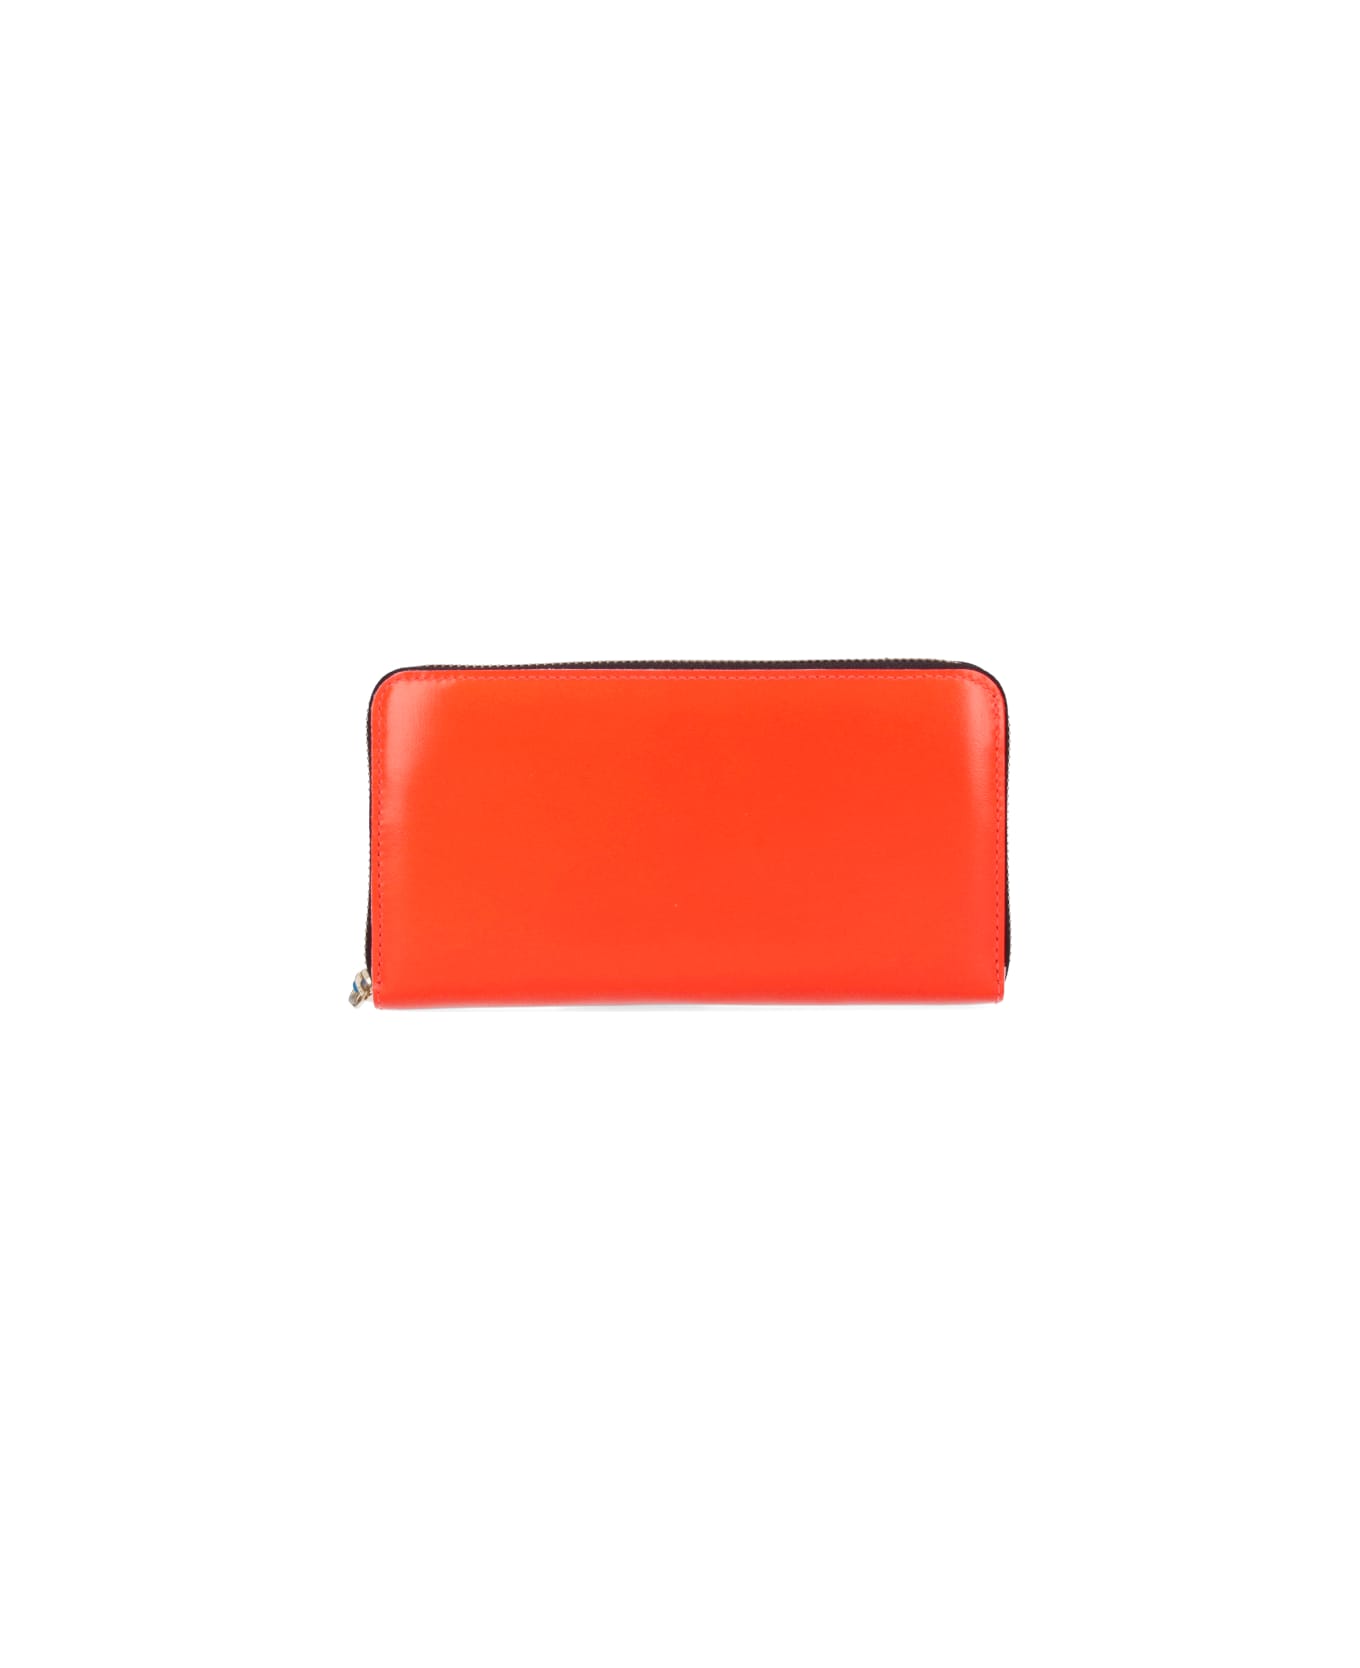 Comme des Garçons Wallet Super Fluo Zipper Wallet - Orange